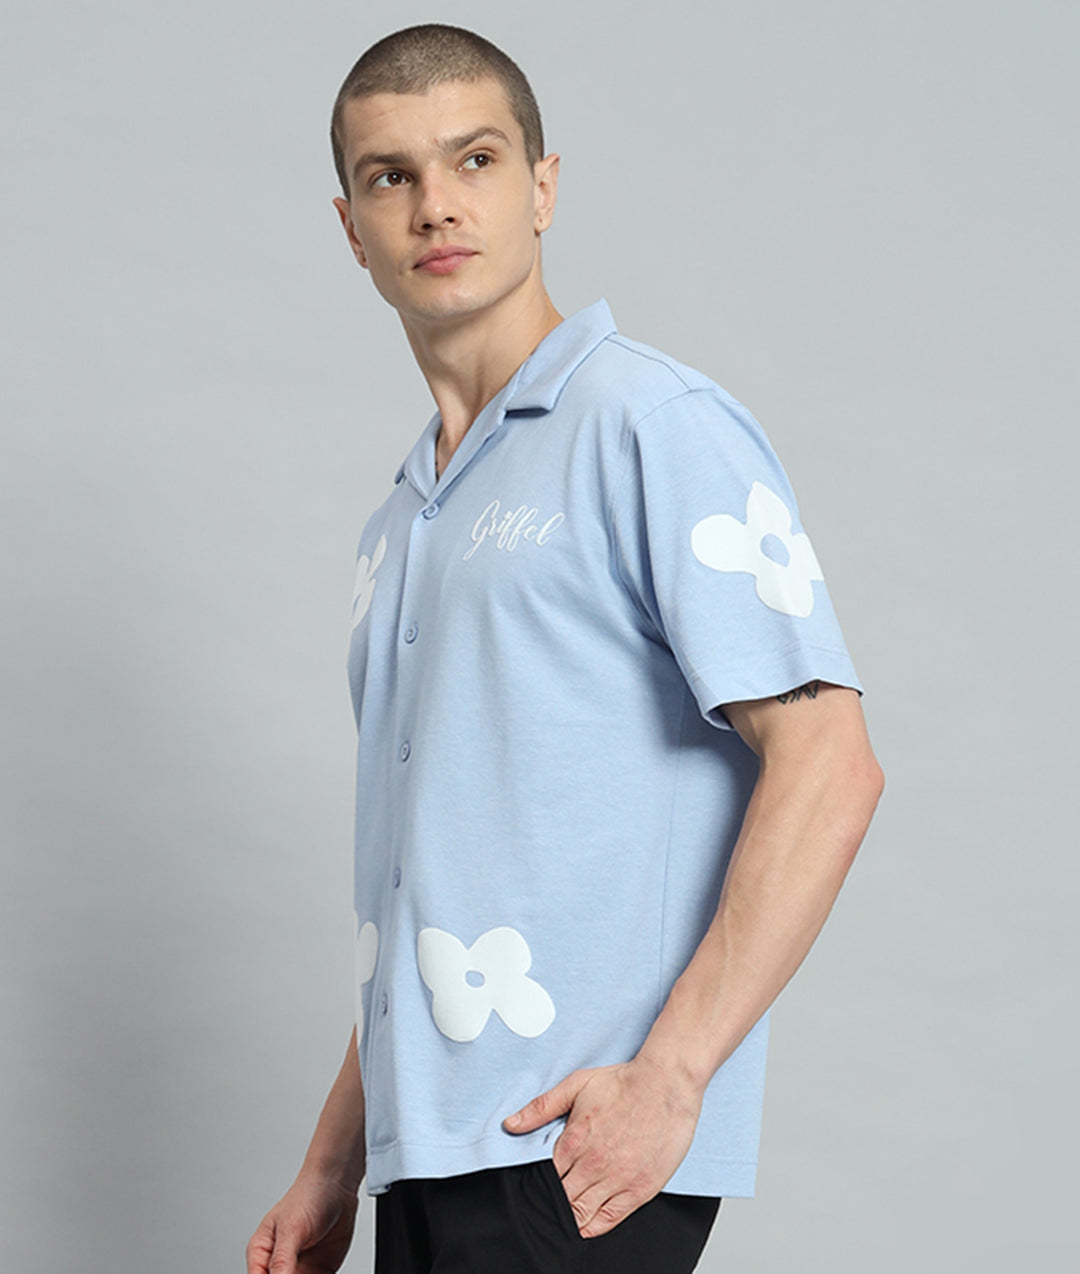 GRIFFEL Flower Printed Regular Fit Bowling Shirt